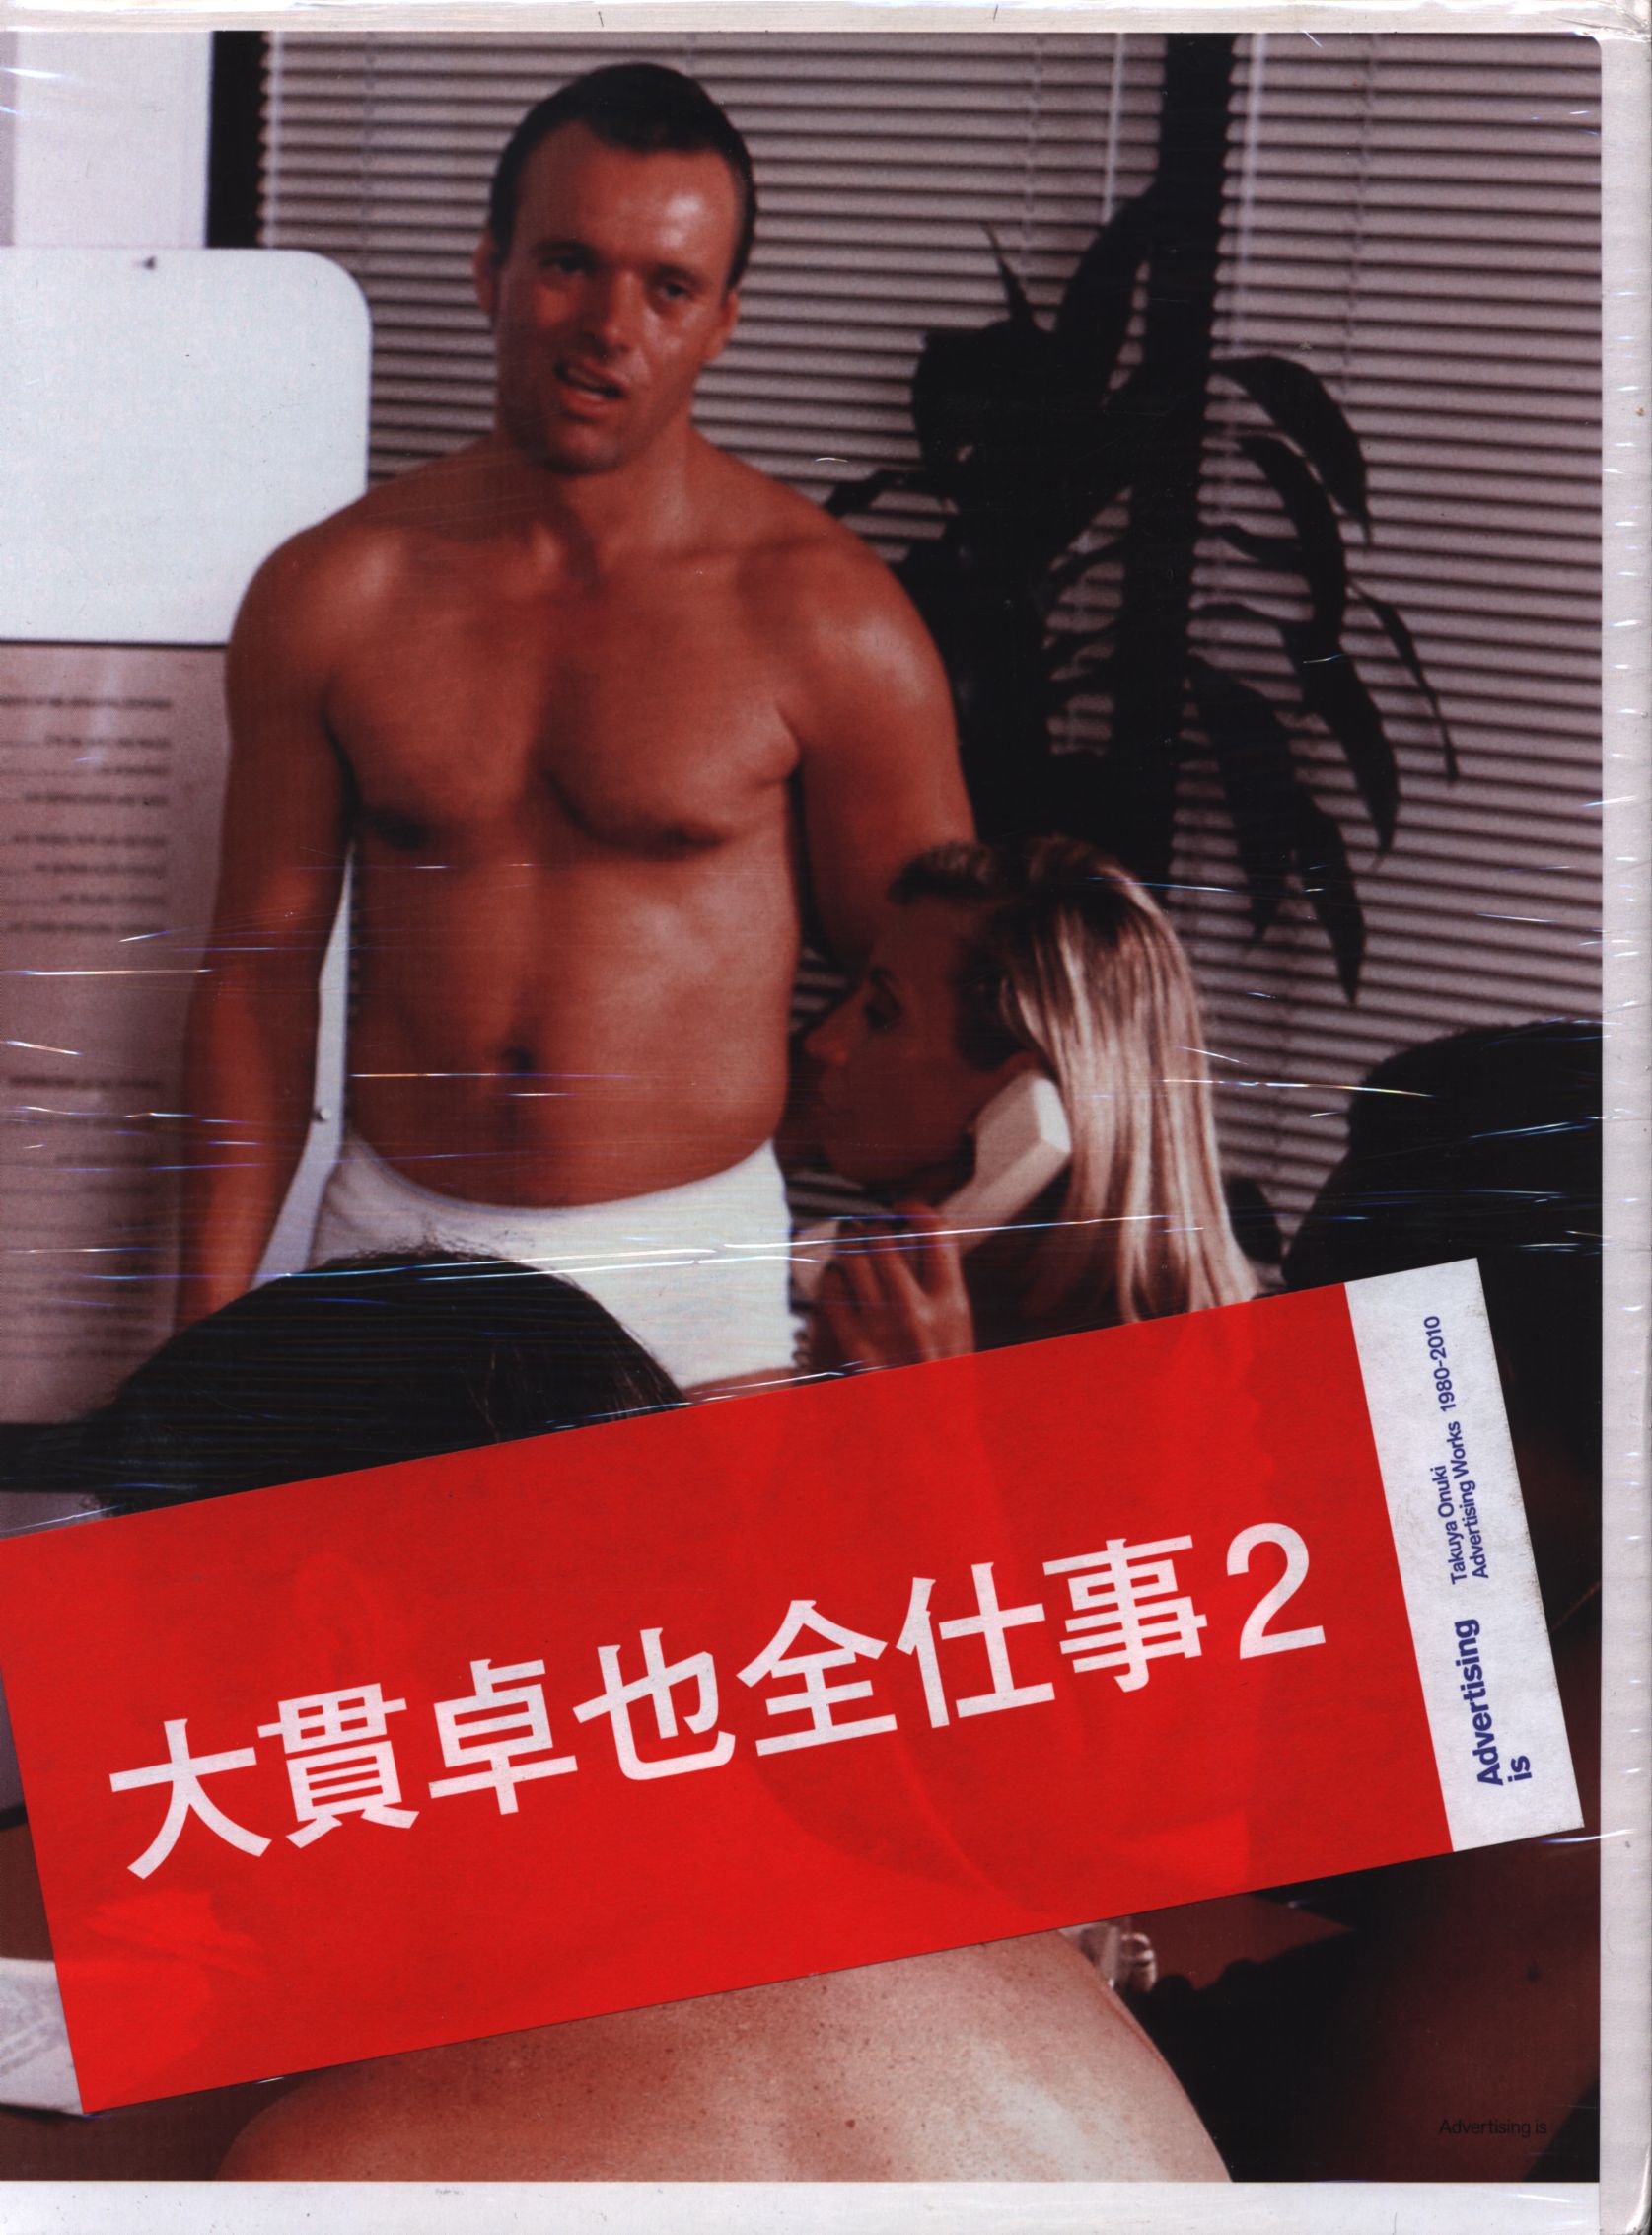 Takuya Ouchi Advertising is Takuya Onuki Advertising Works 1980-2010